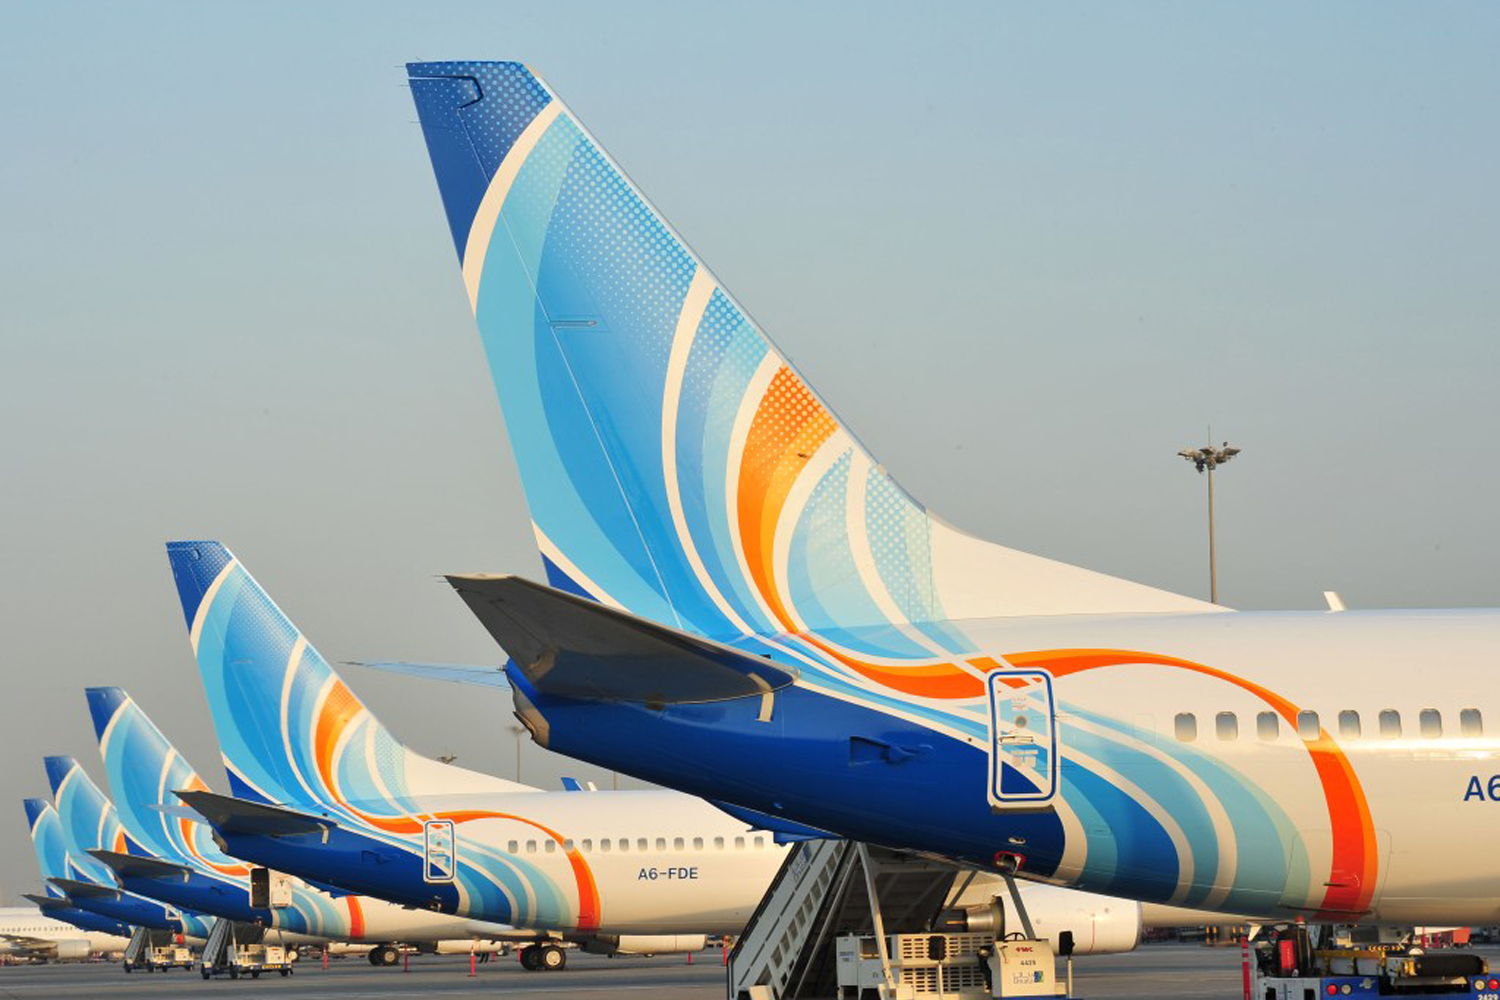 flydubai to resume scheduled passenger flights to 24 destinations this